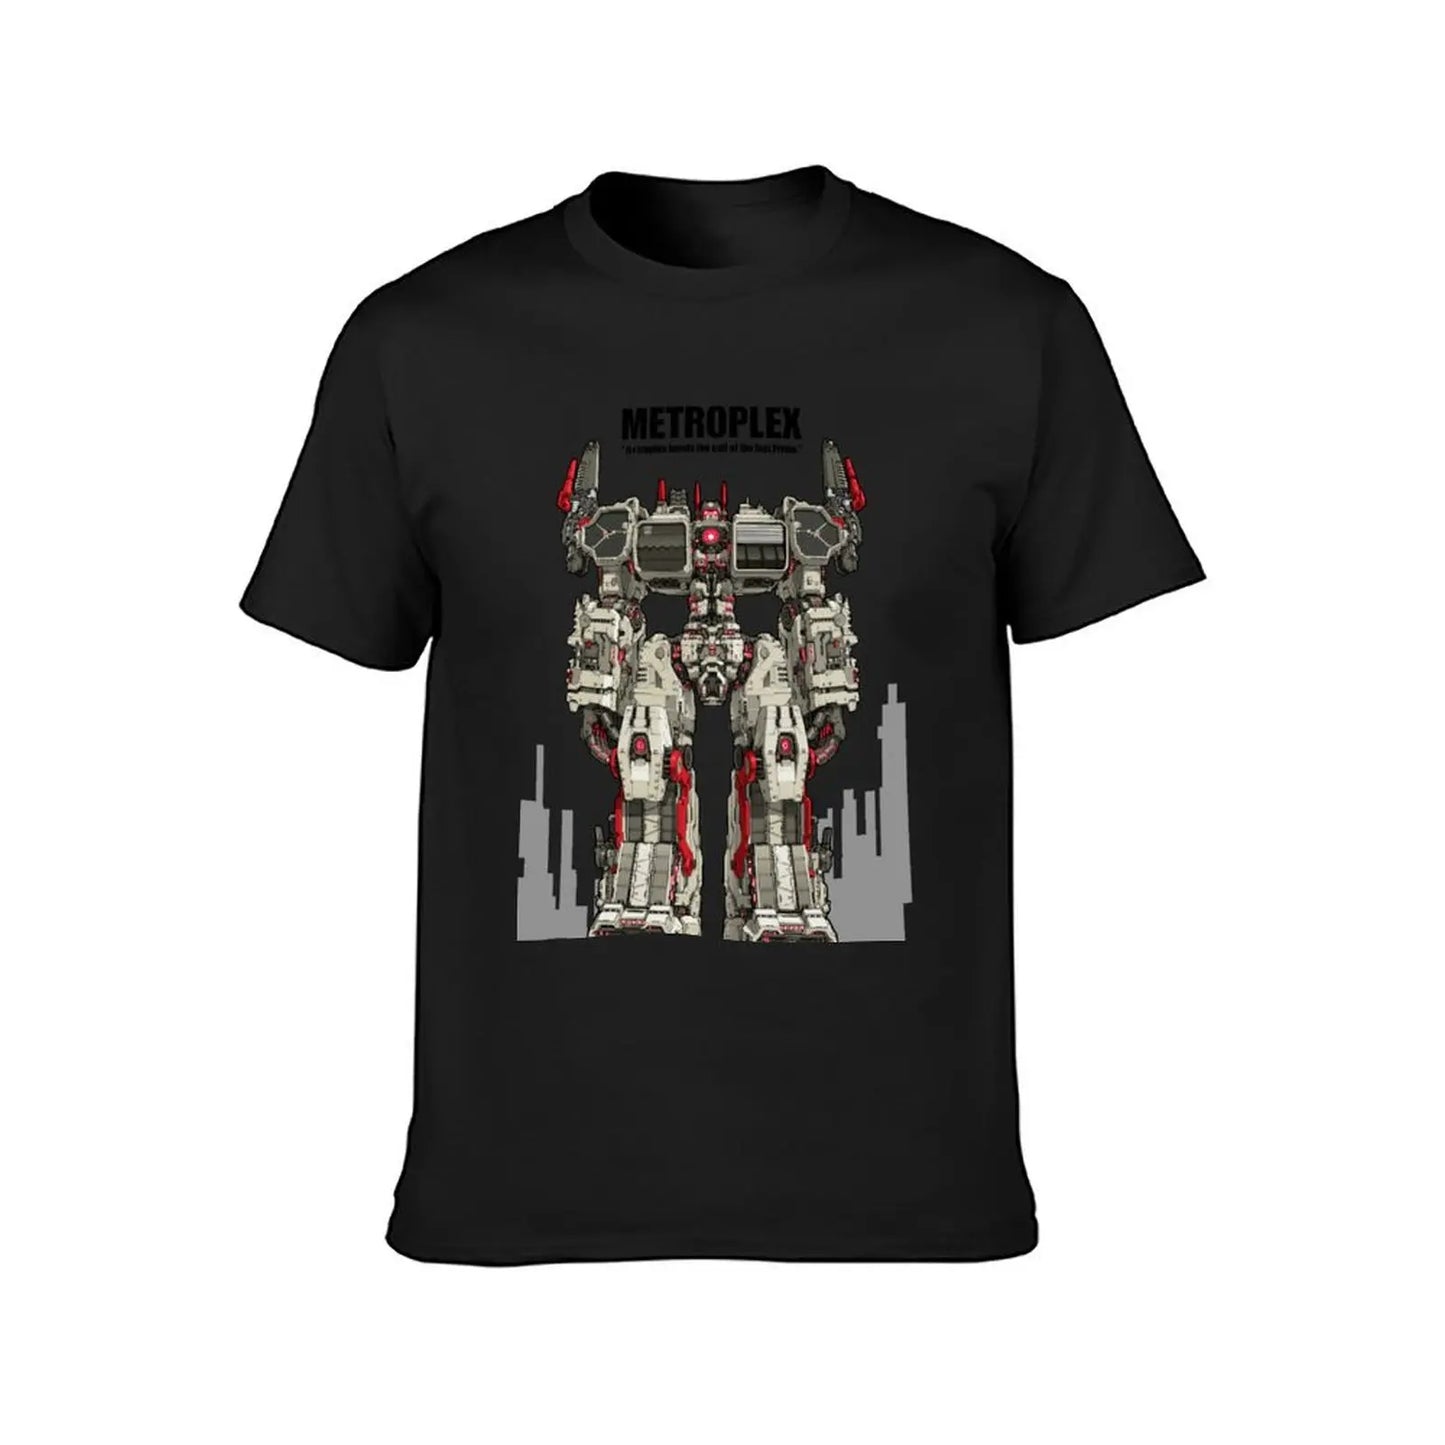 Metroplex_Transformer Citybot T-Shirt anime oversizeds mens big and tall t shirts